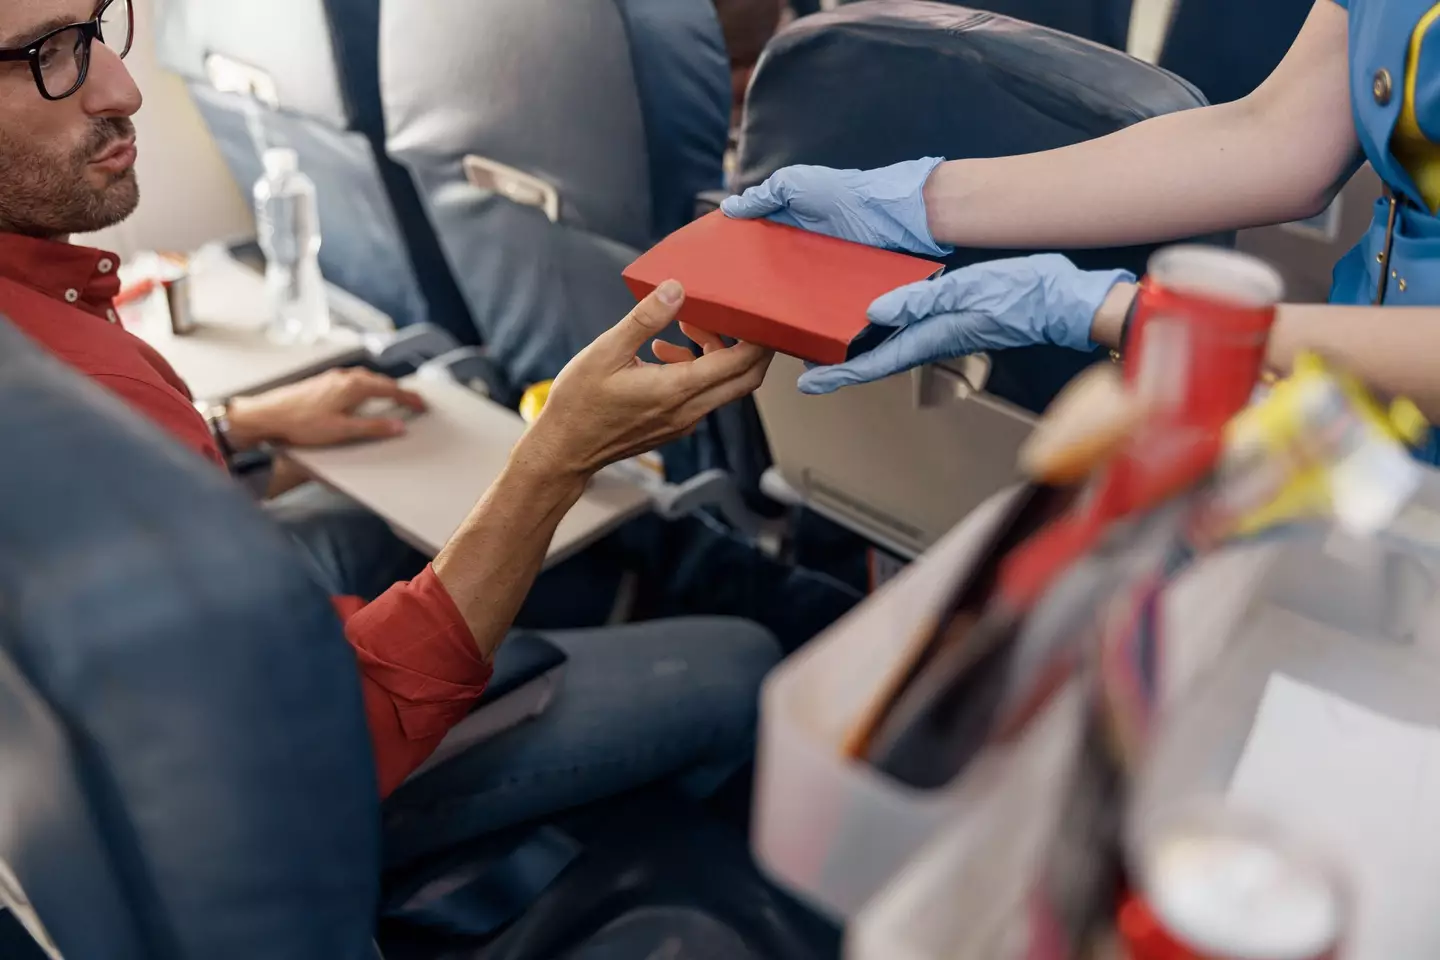 Passengers should avoid eating on a long haul flight.